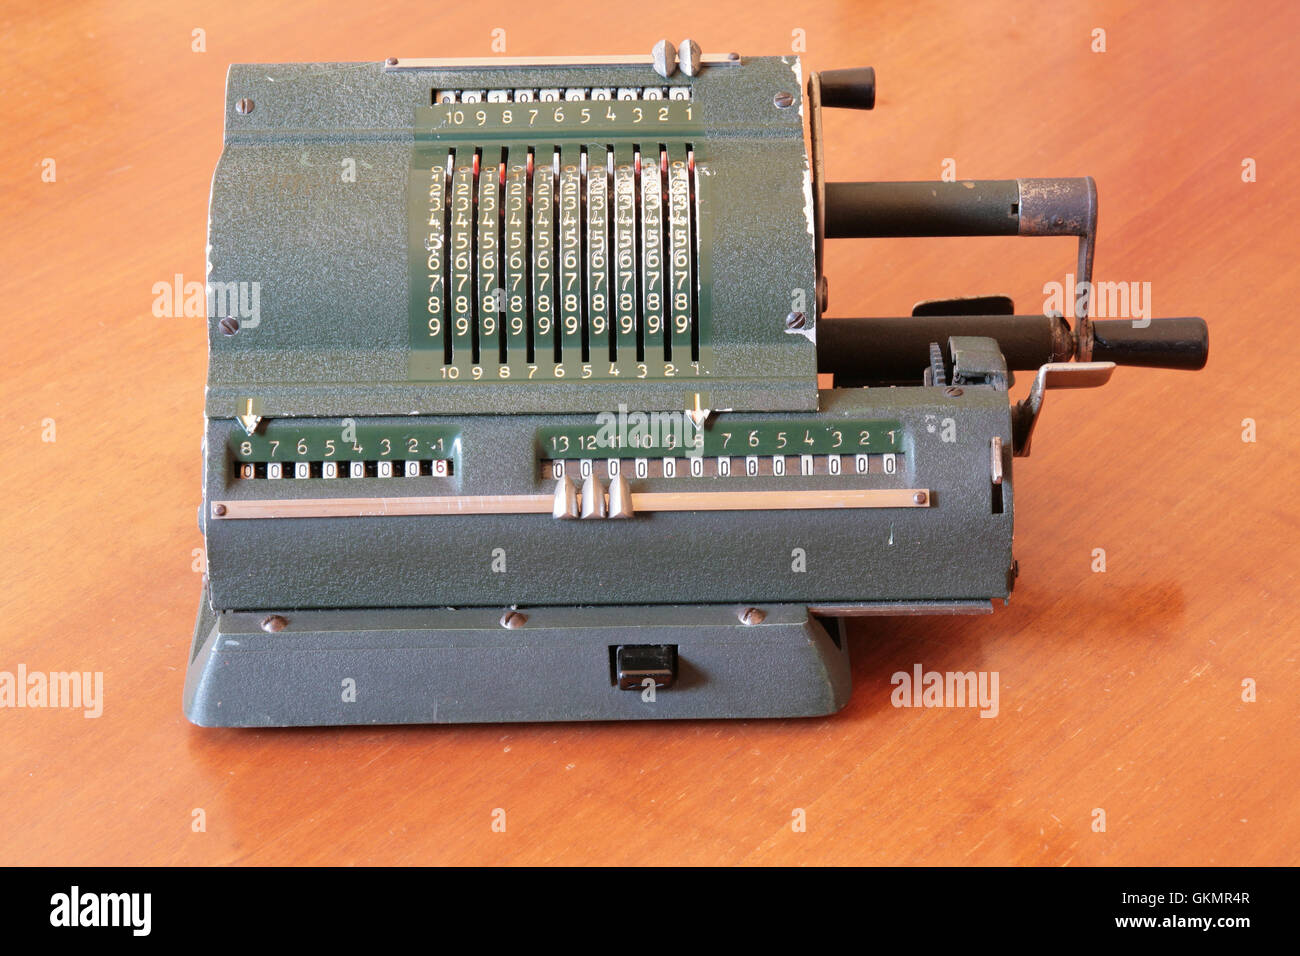 Ancient manual calculator Stock Photo - Alamy